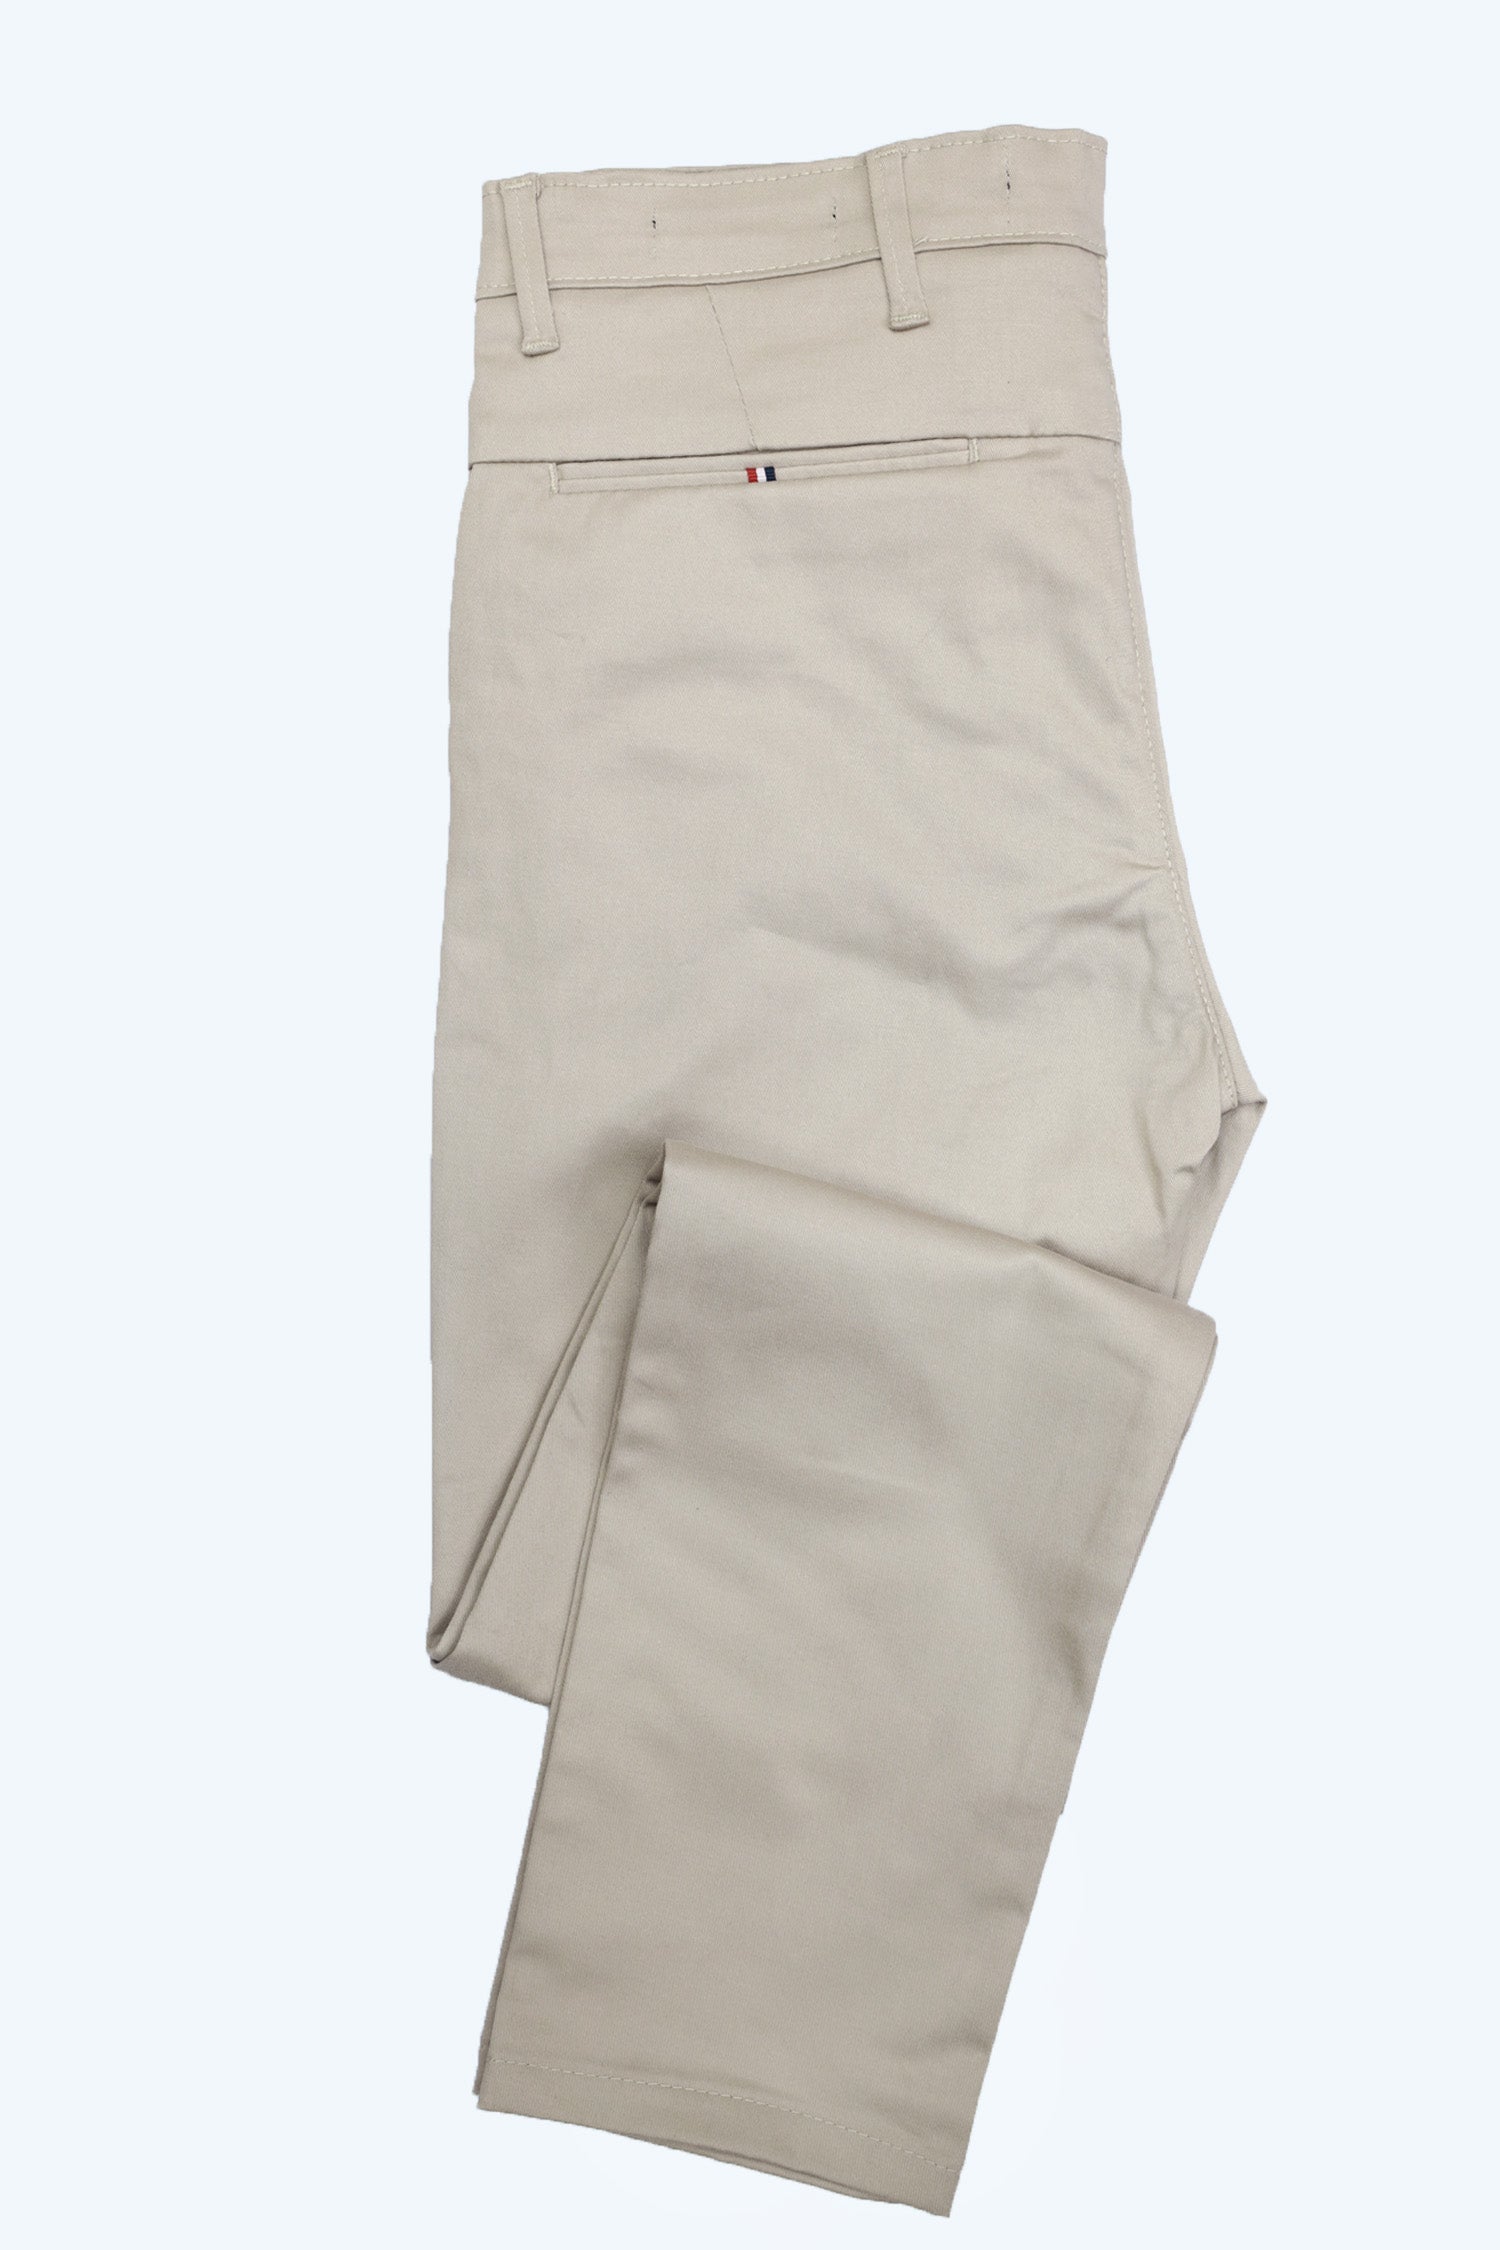 Turbo Slim fit Plain Cotton Pant